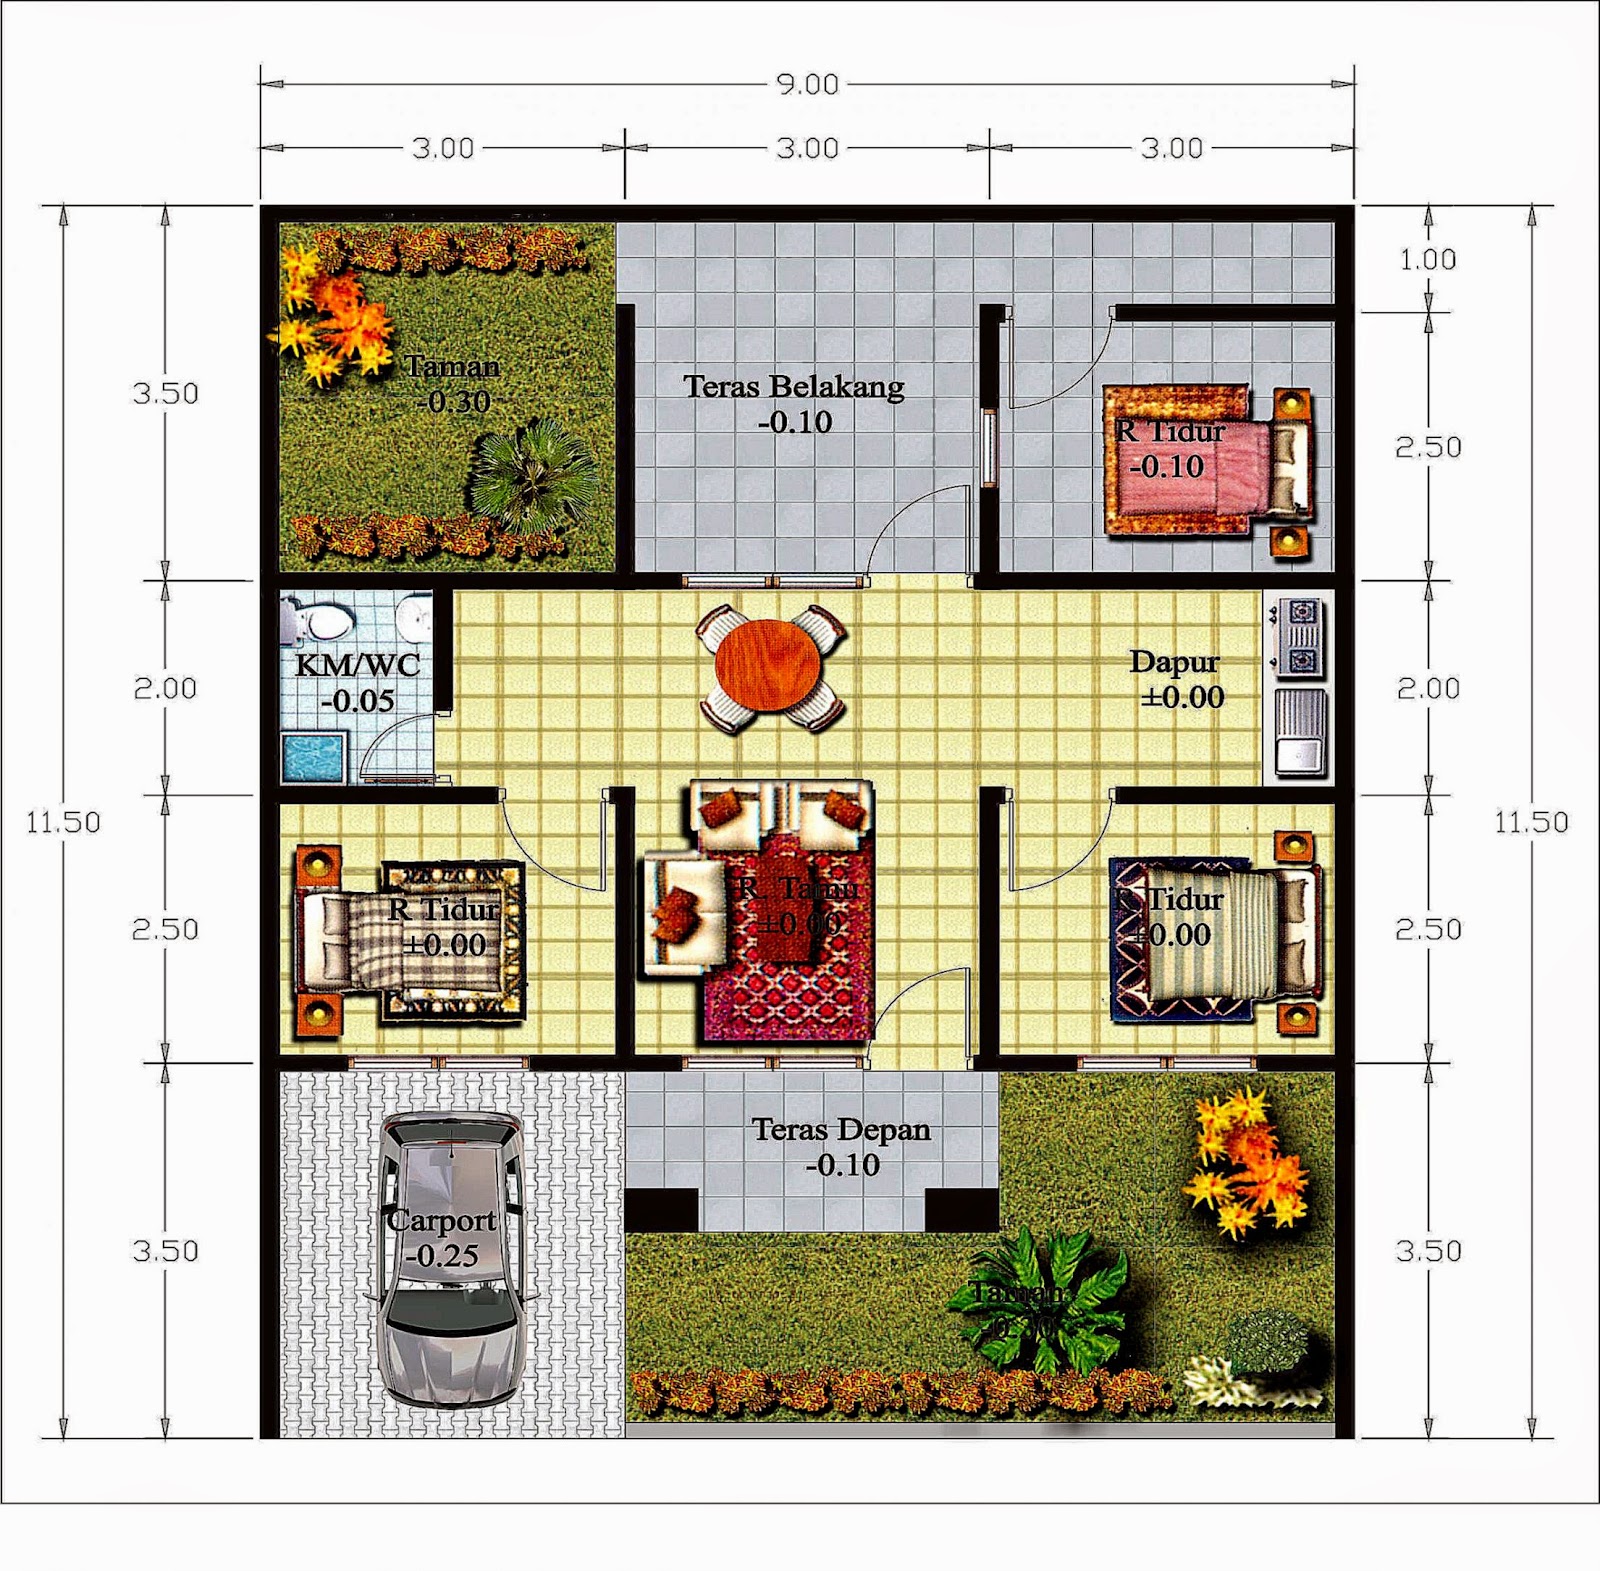  Denah  Rumah  Sederhana  Ukuran  6x9  gambar rumah  minimalis  